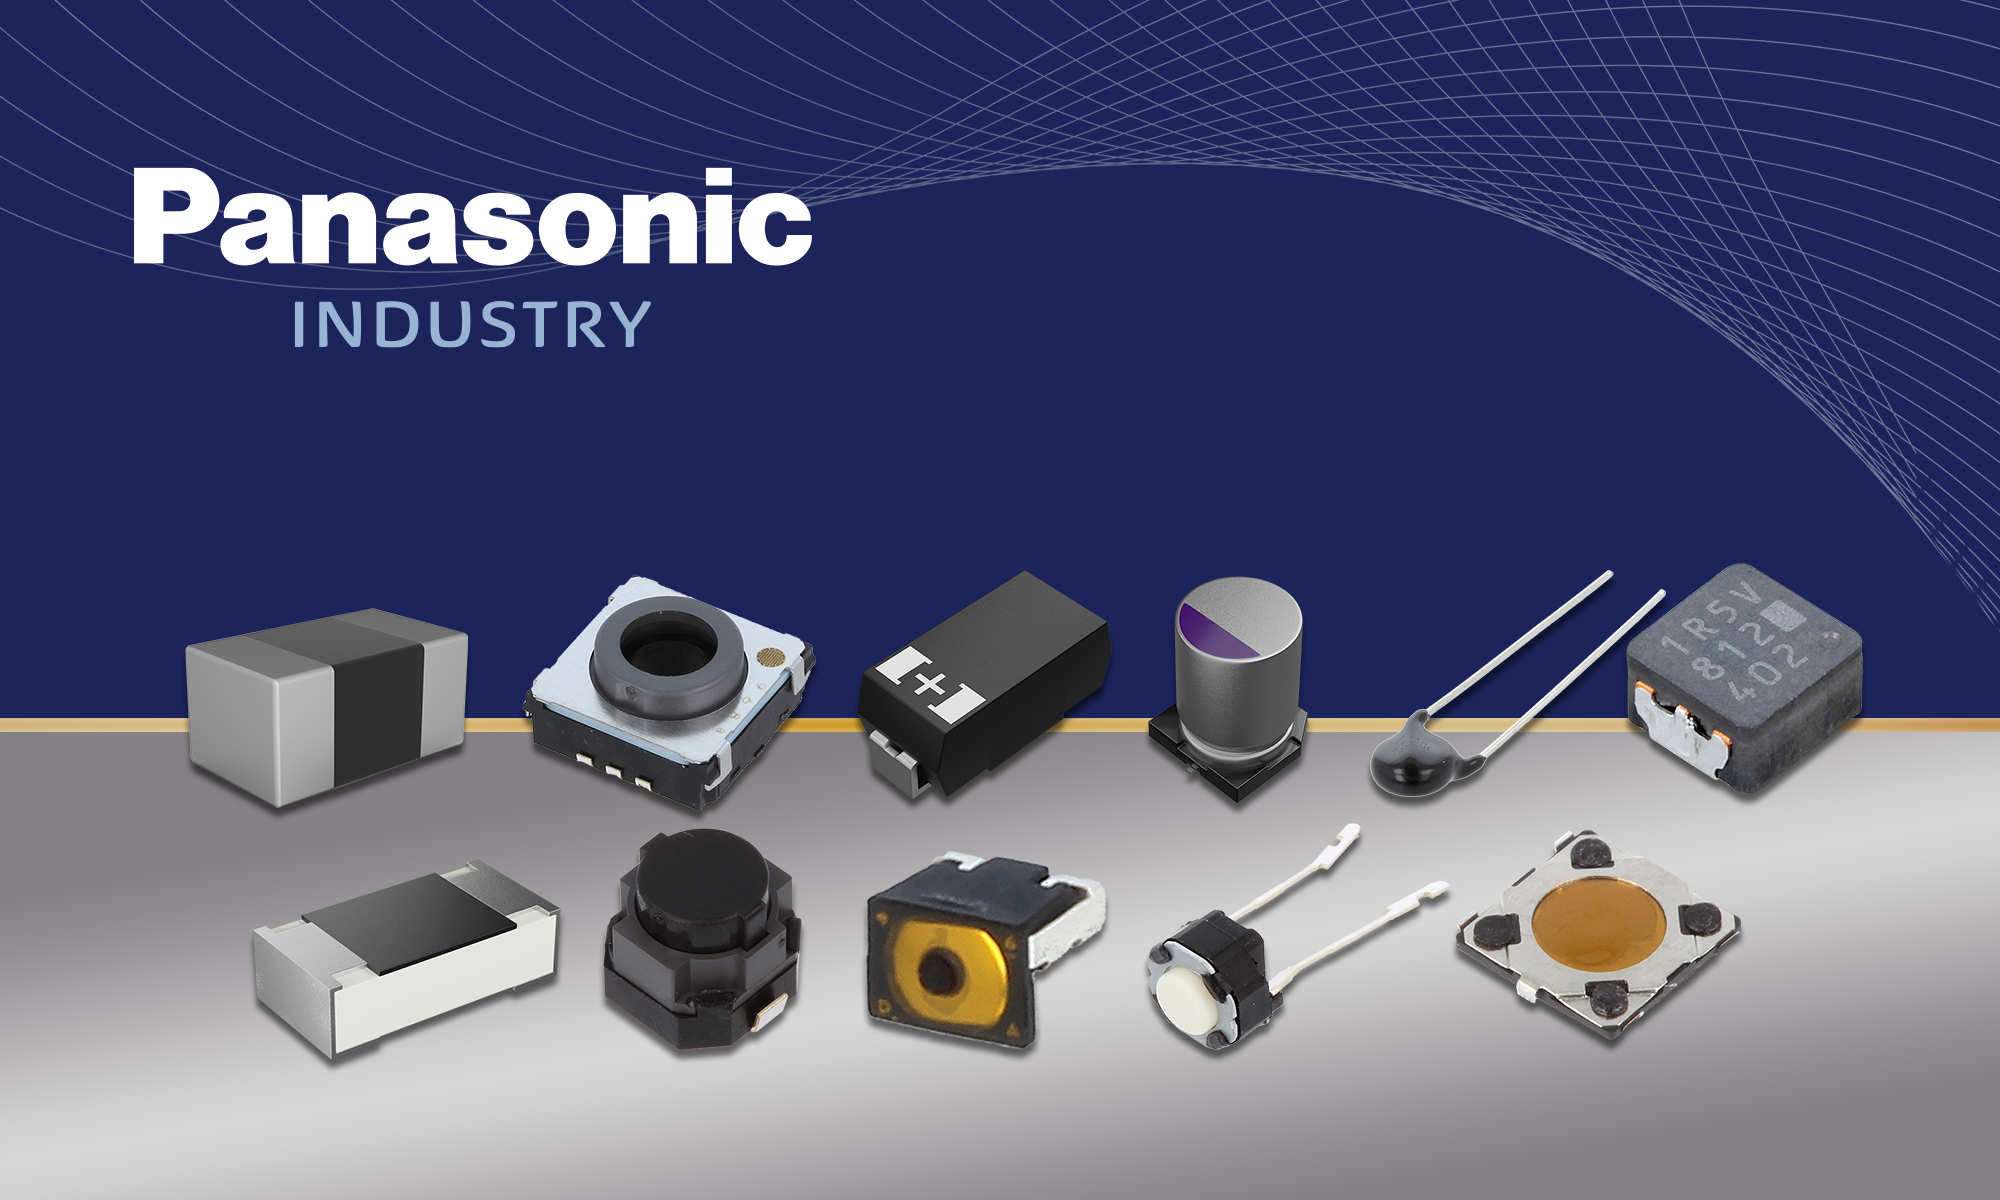 PANASONIC | Electronic components. Distributor, online shop 